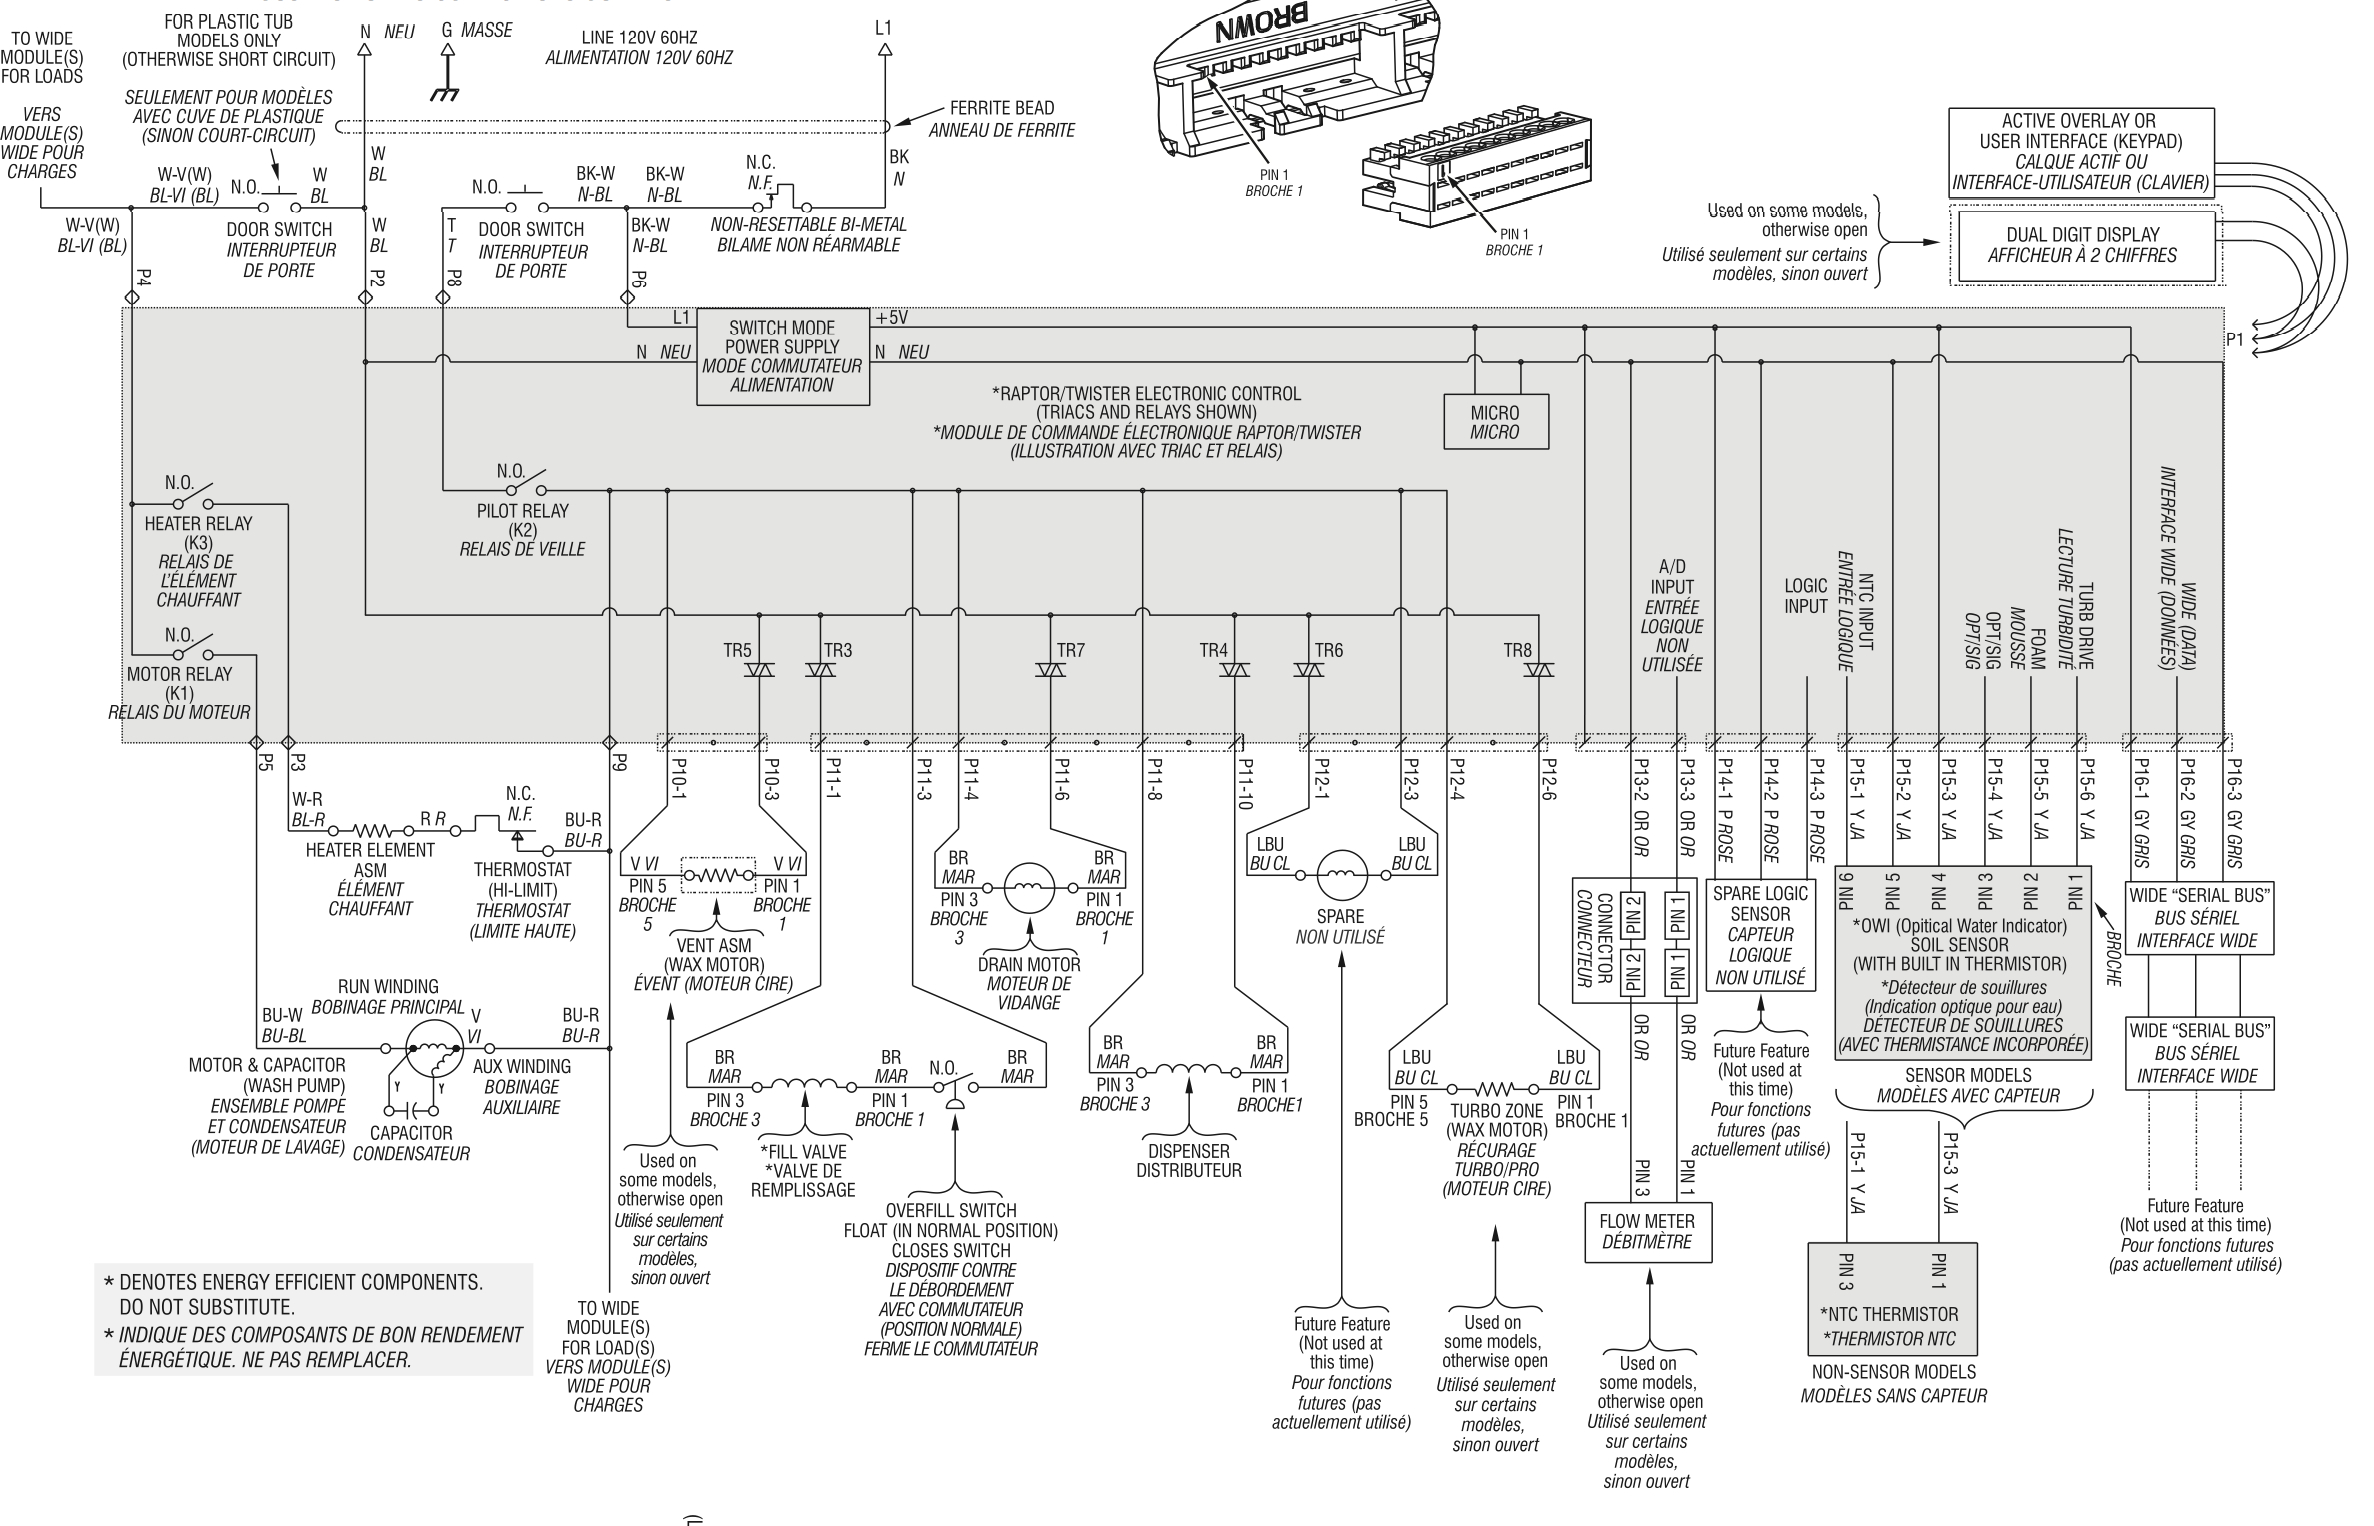 I Need A Wiring Diagram For A Mod Mdbh979Awb2 Dishwasher. It Is A - Ac Unit Wiring Diagram